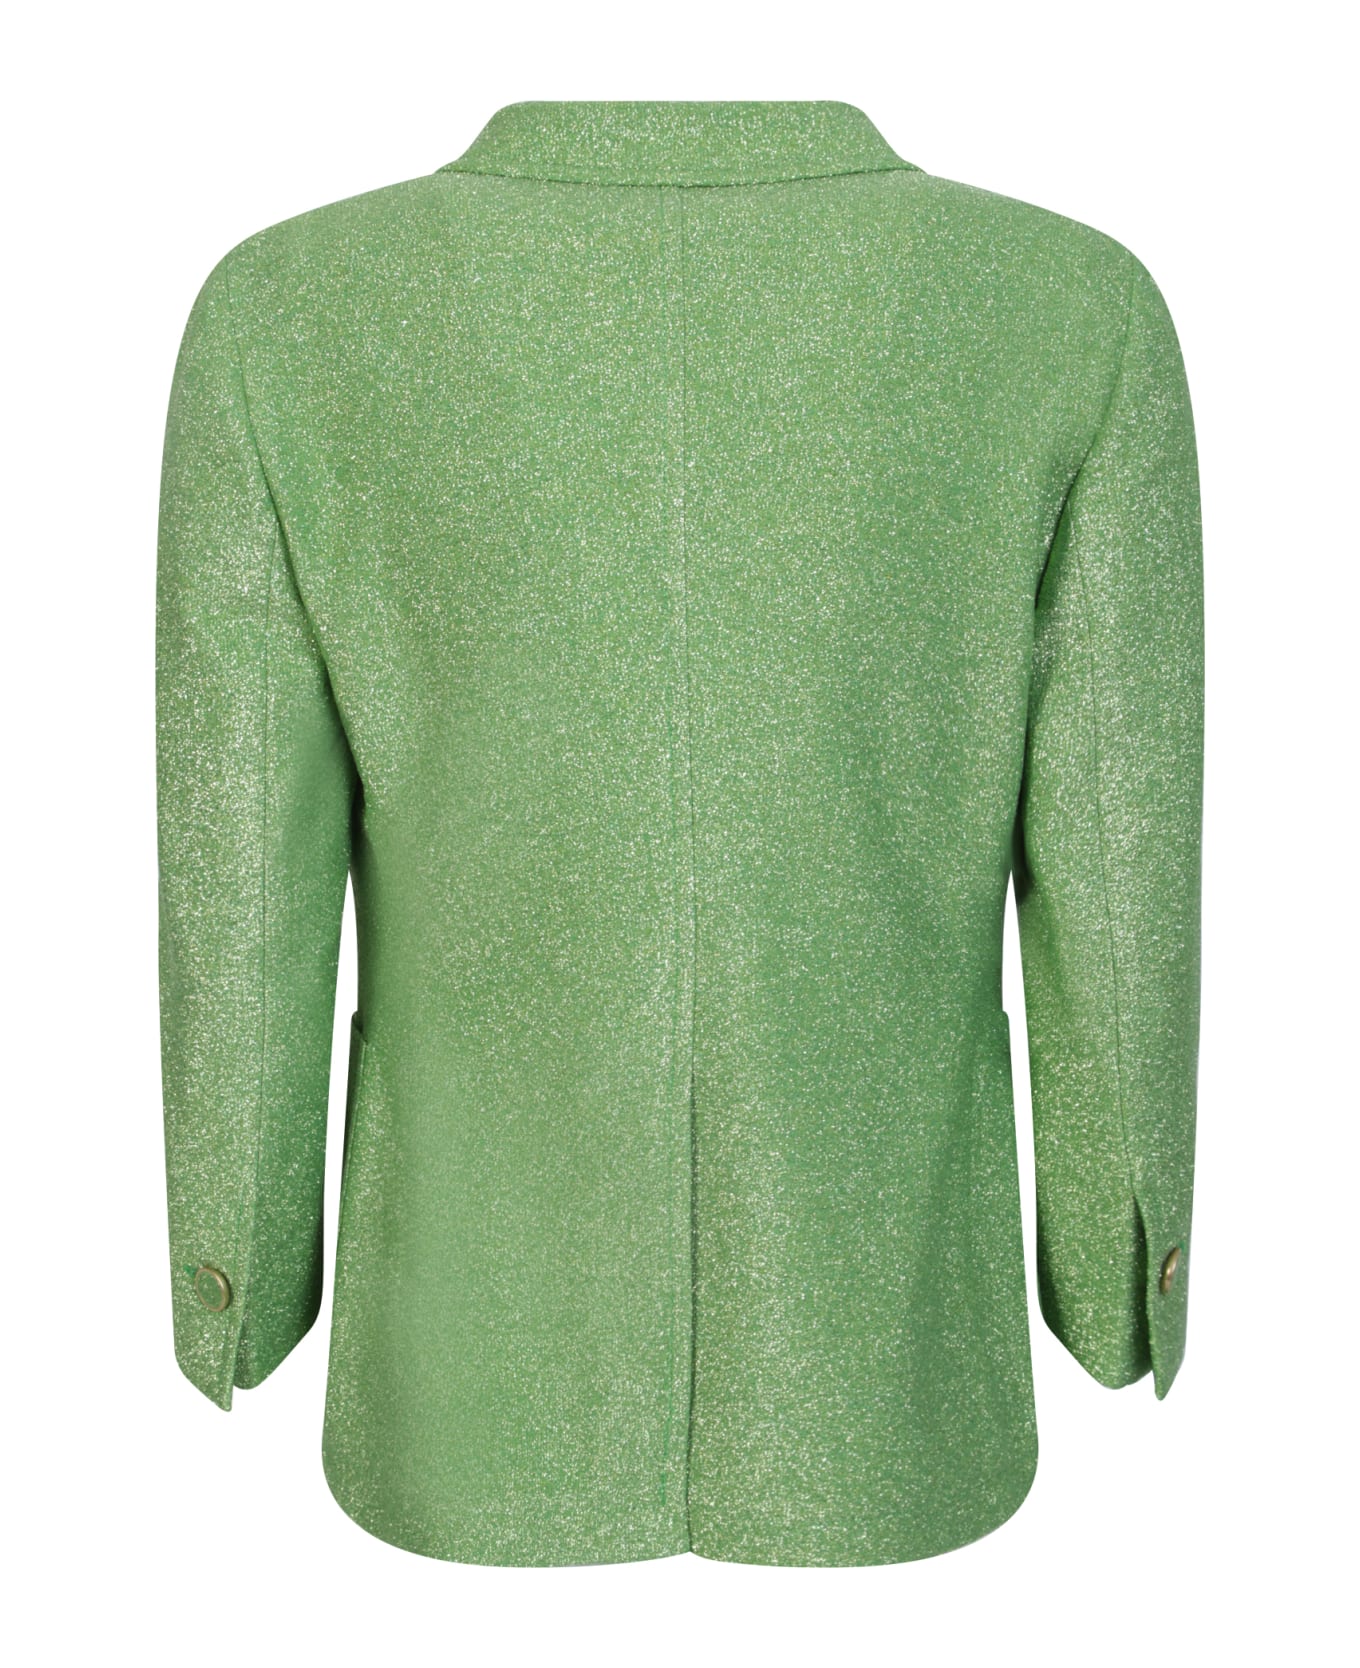 Tagliatore Debra Jacket In Green - Green